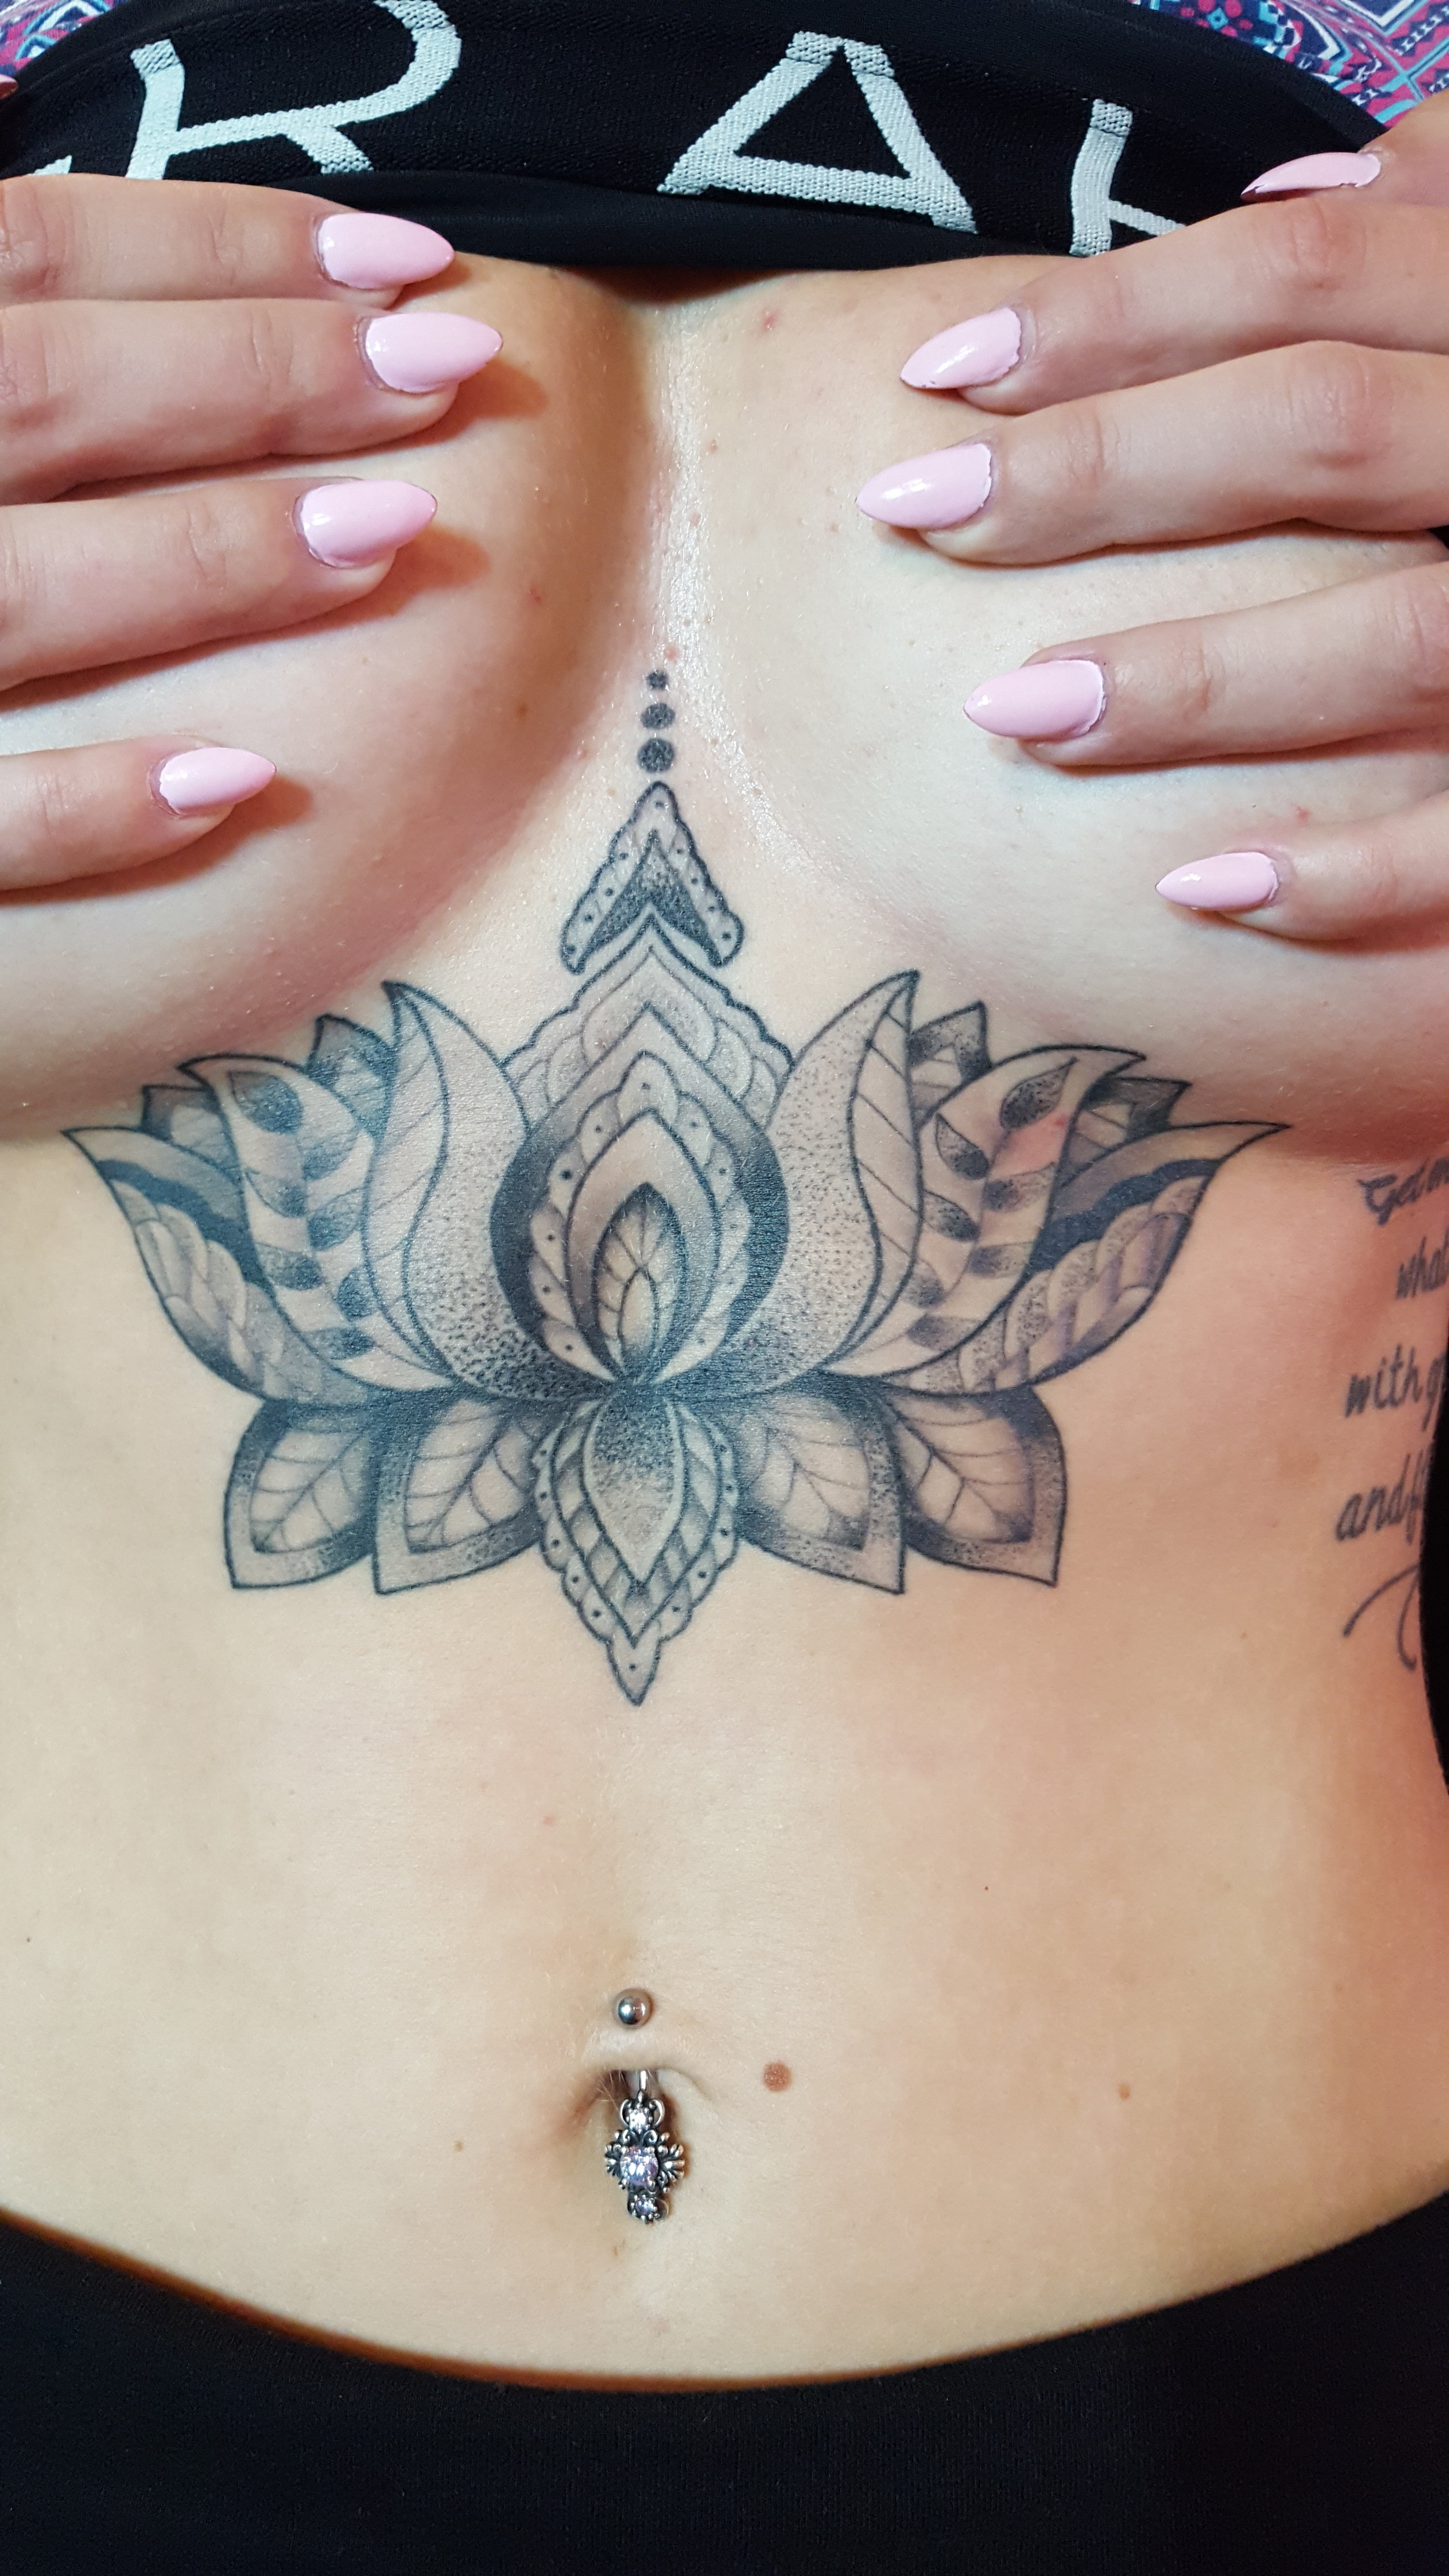 Lotus Mandala Underboob Temporary Tattoo